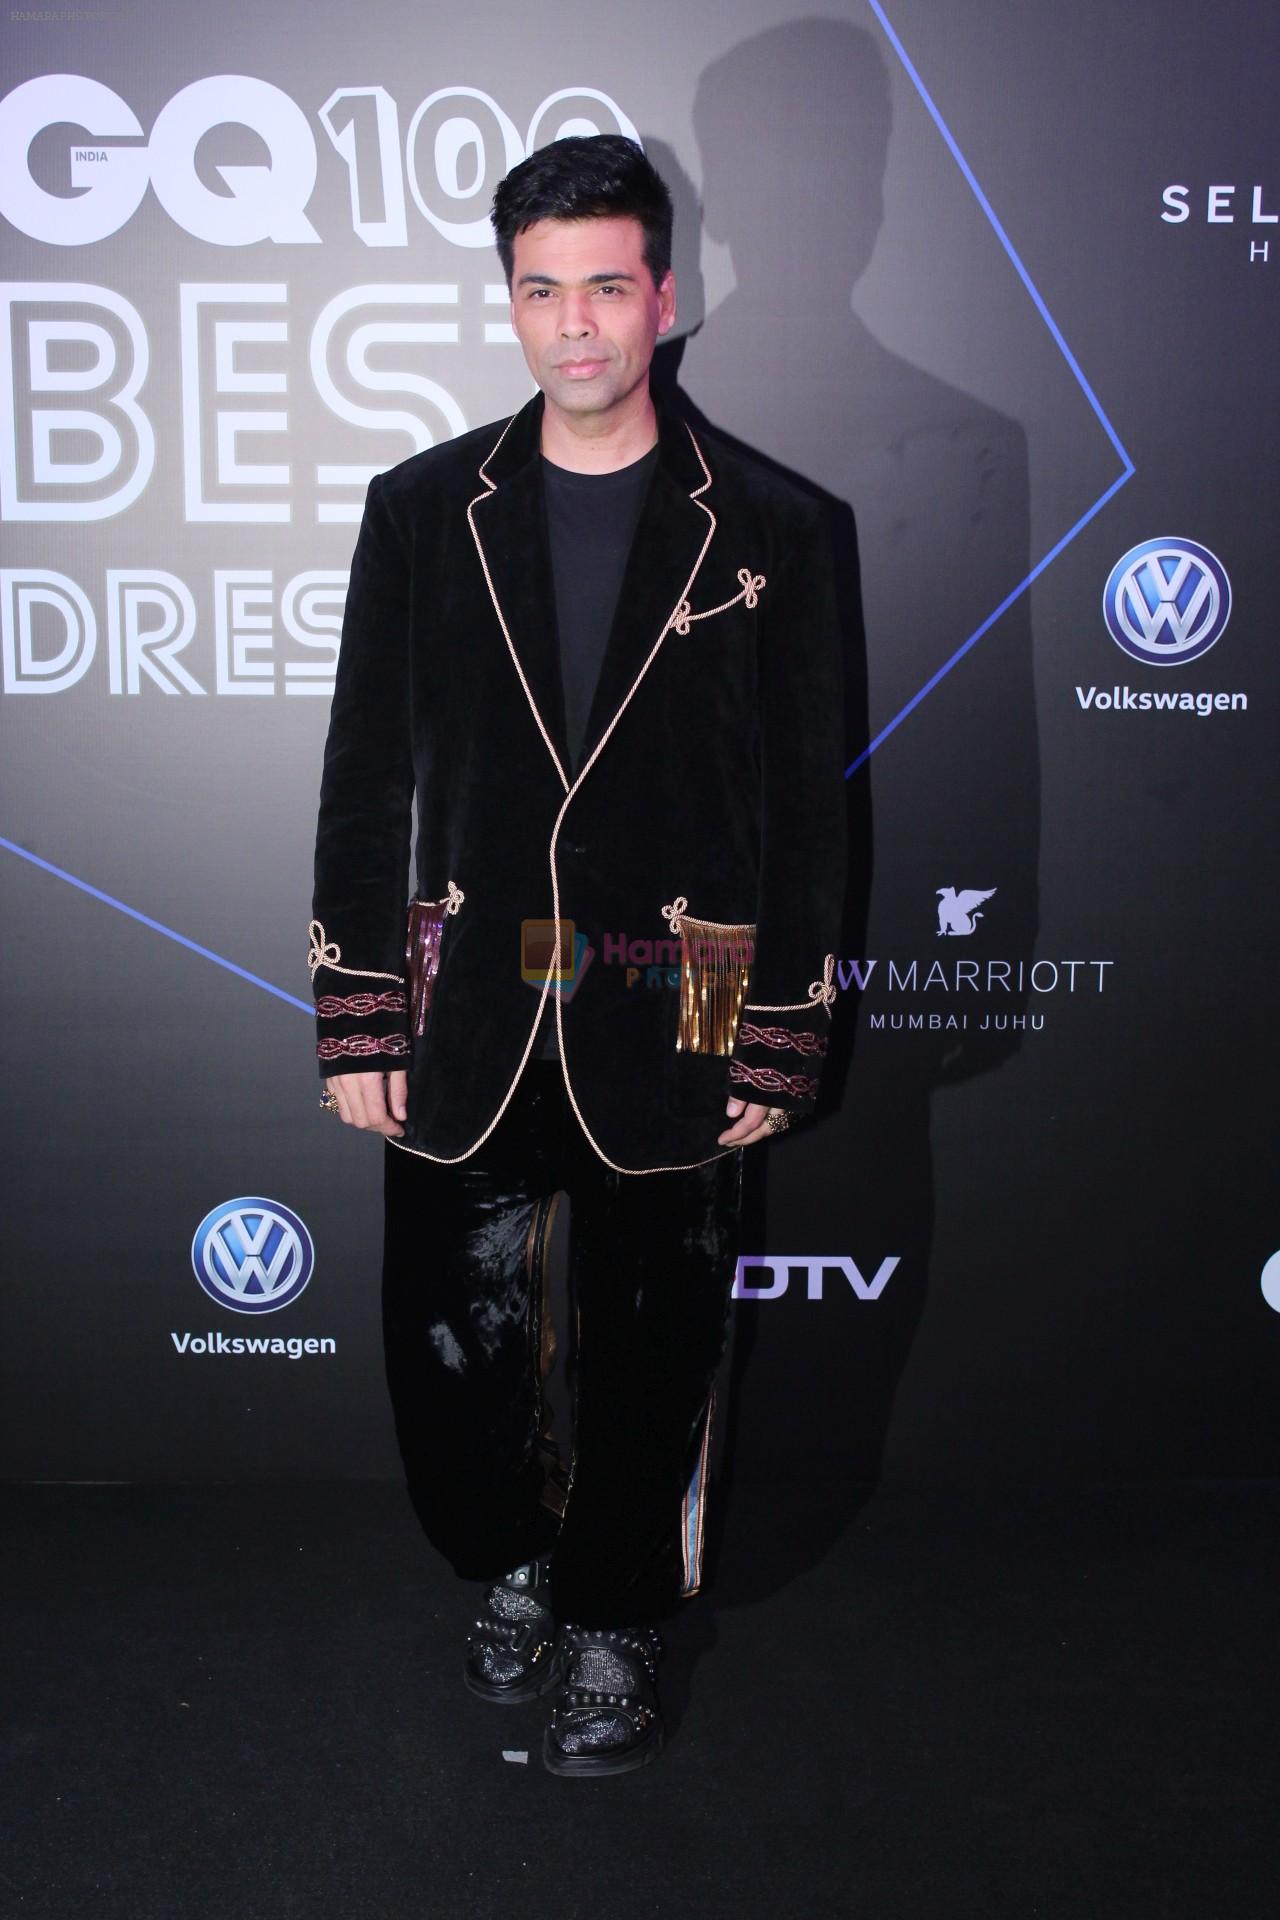 Karan Johar at GQ 100 Best Dressed Awards 2019 on 2nd June 2019